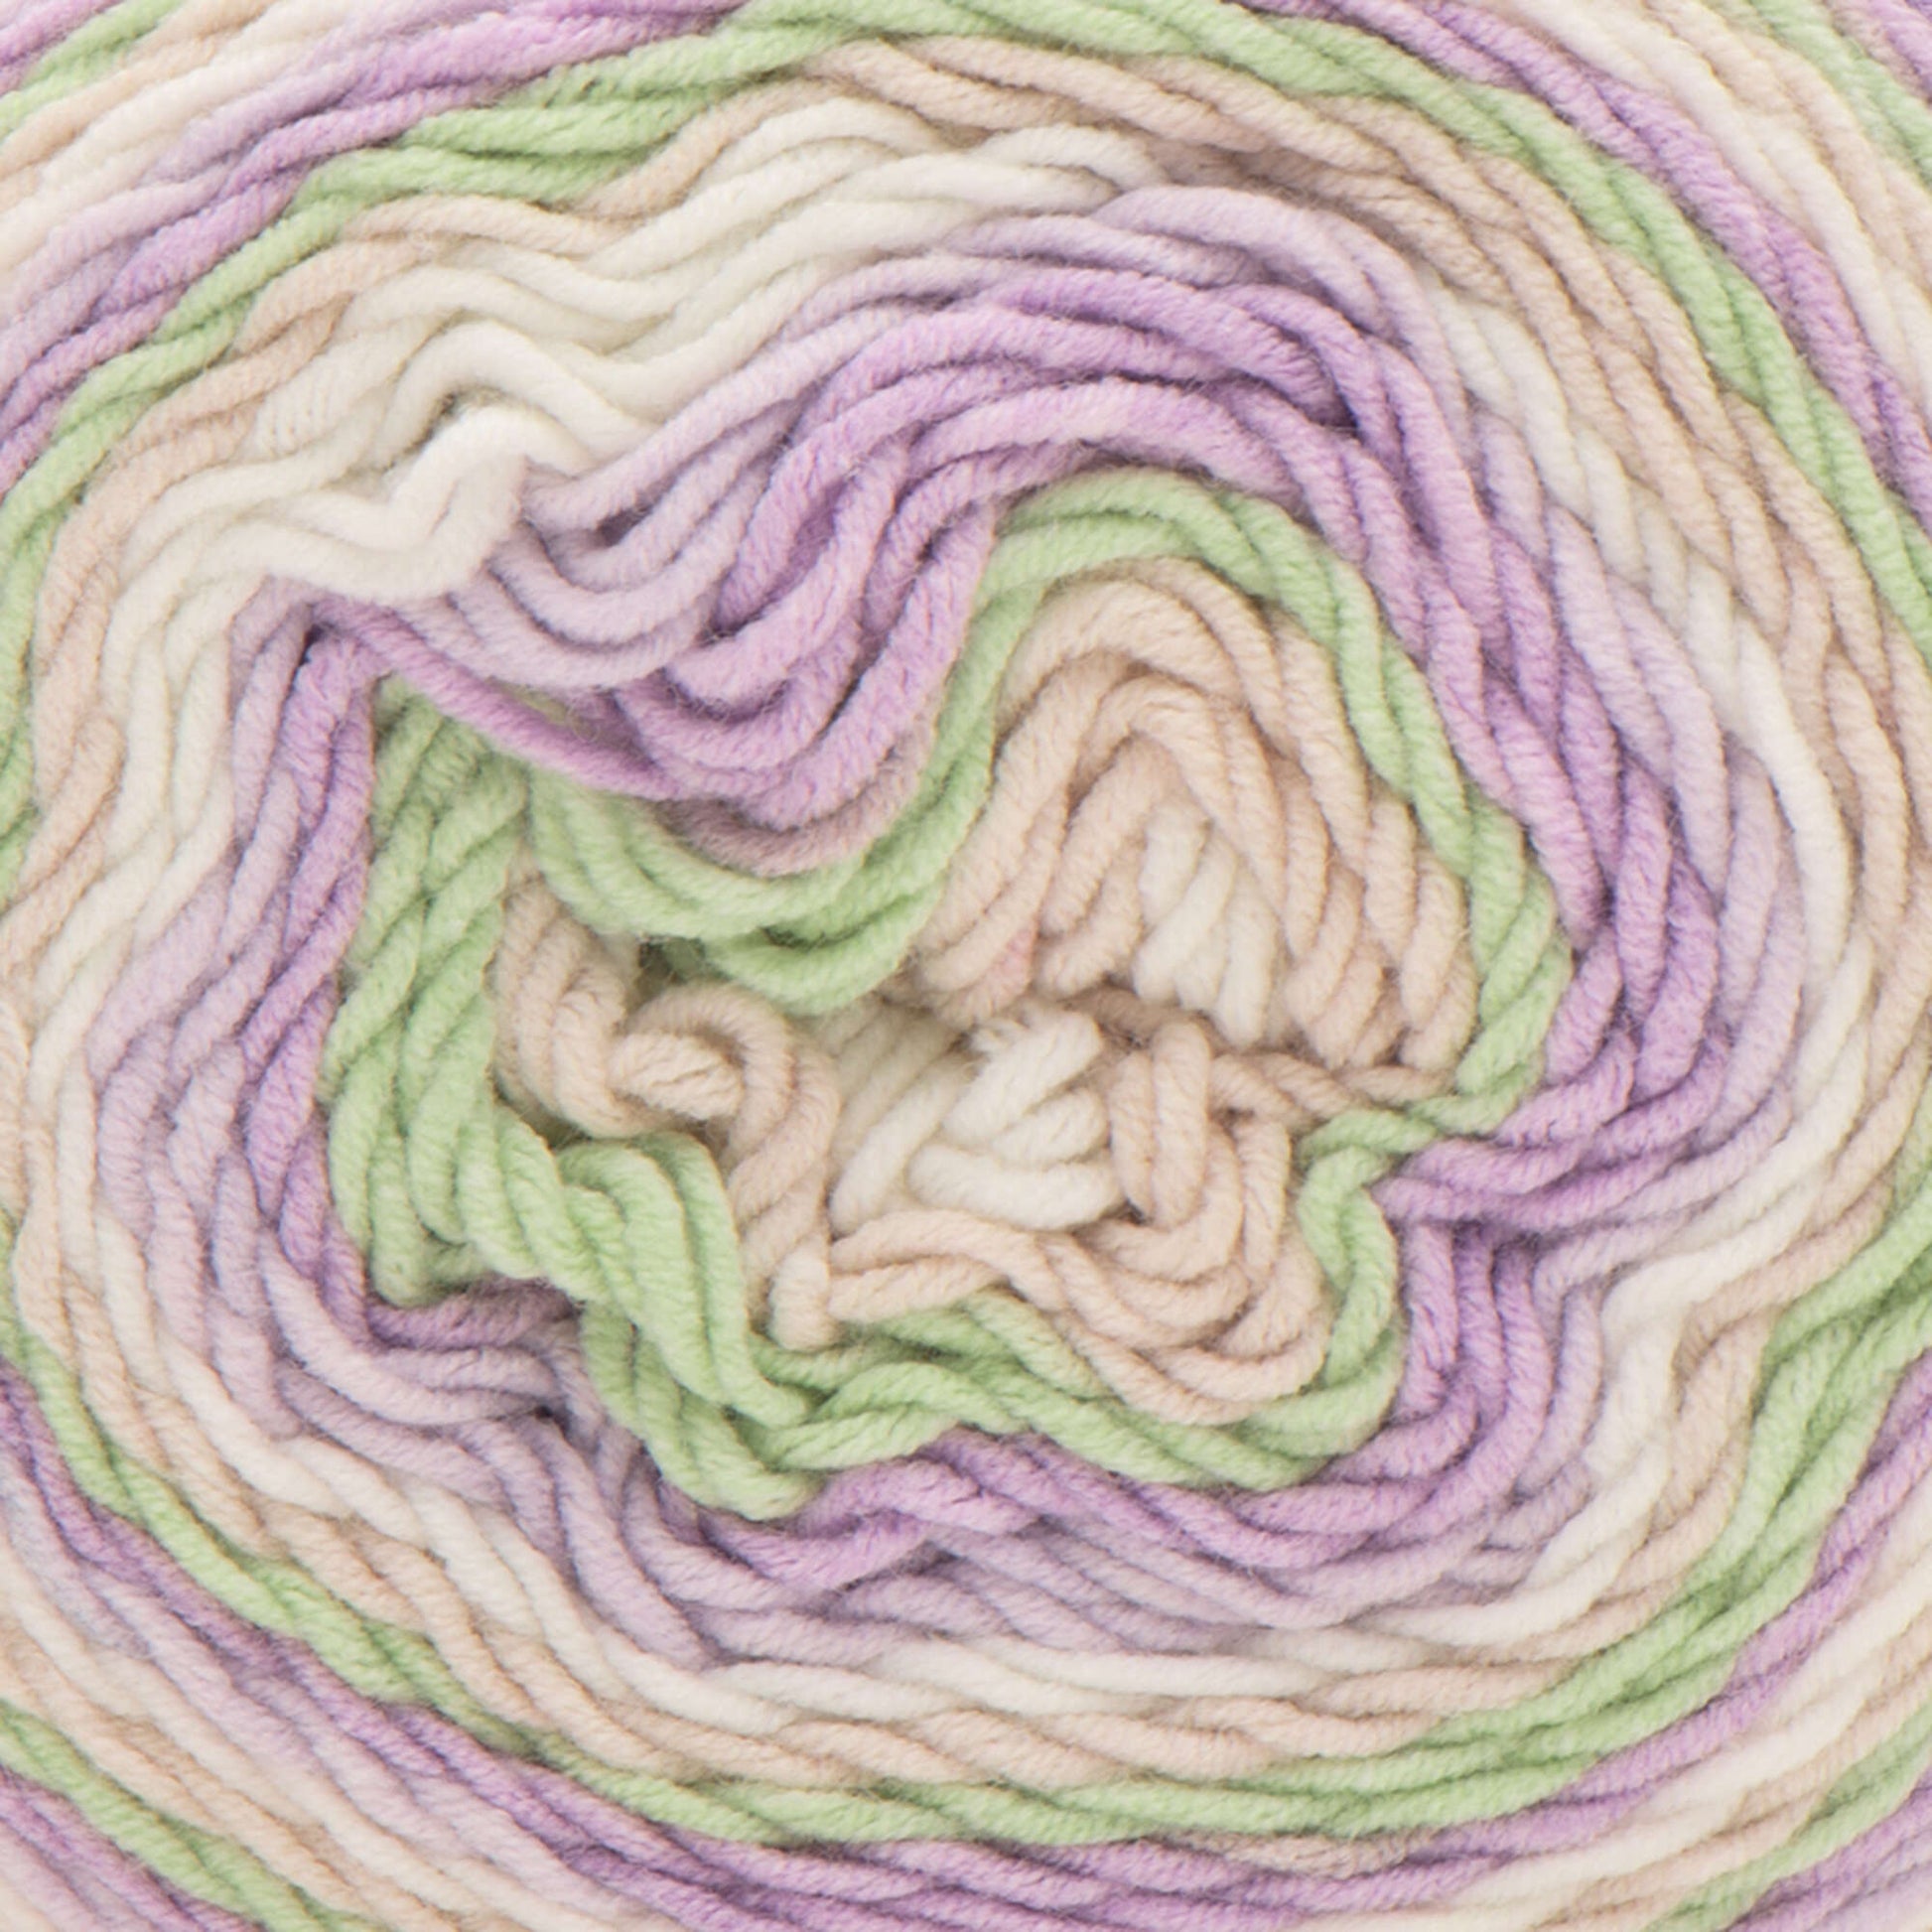 Caron Cotton Cakes Yarn (250g/8.8oz) - Discontinued Shades